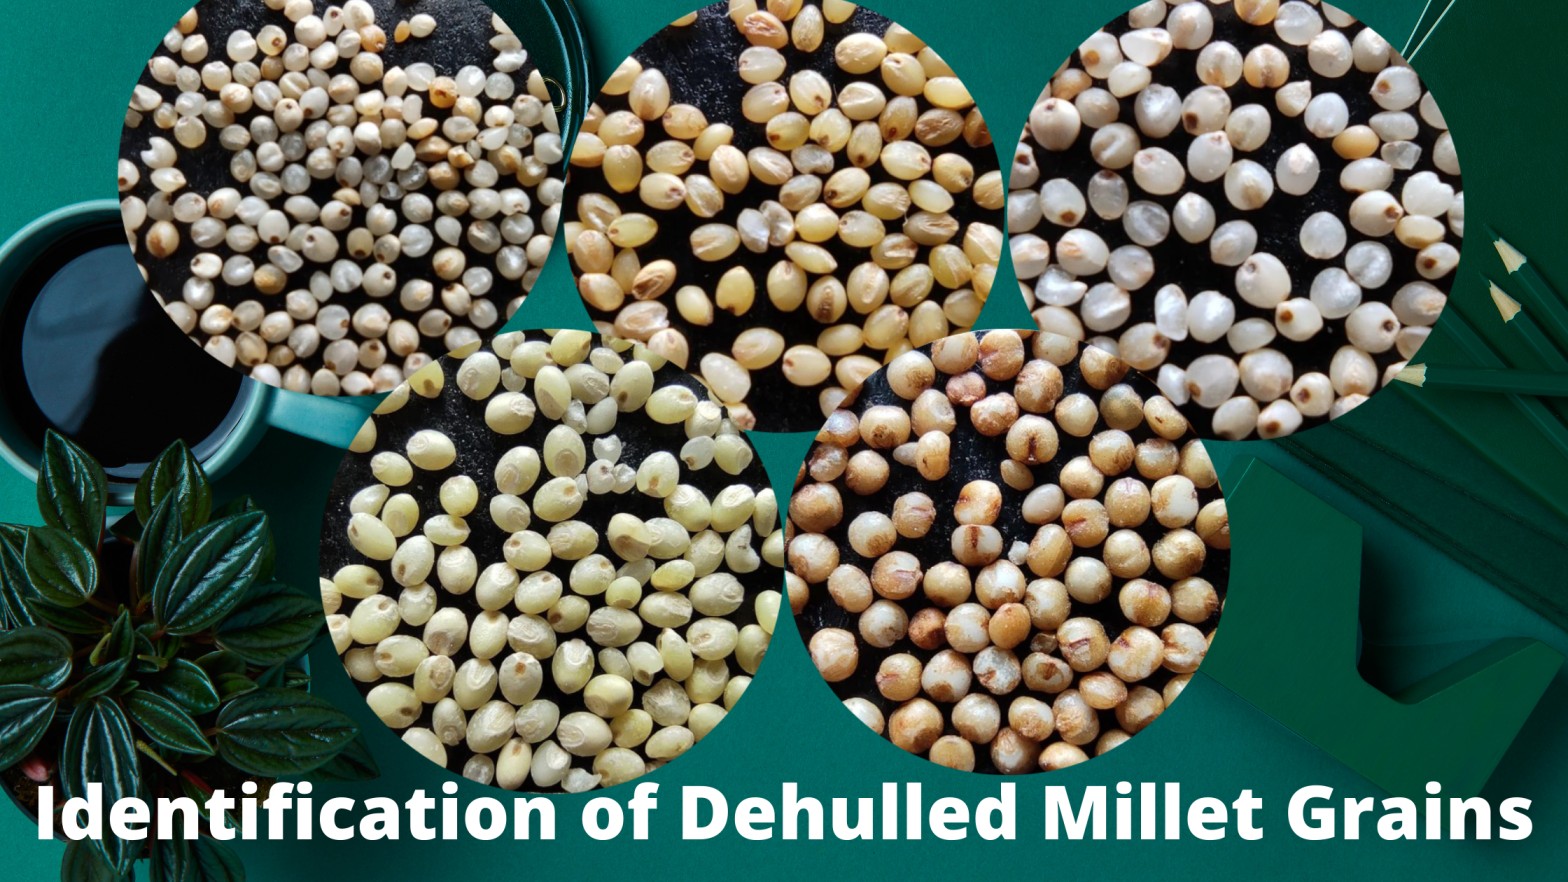 Dehulled millets